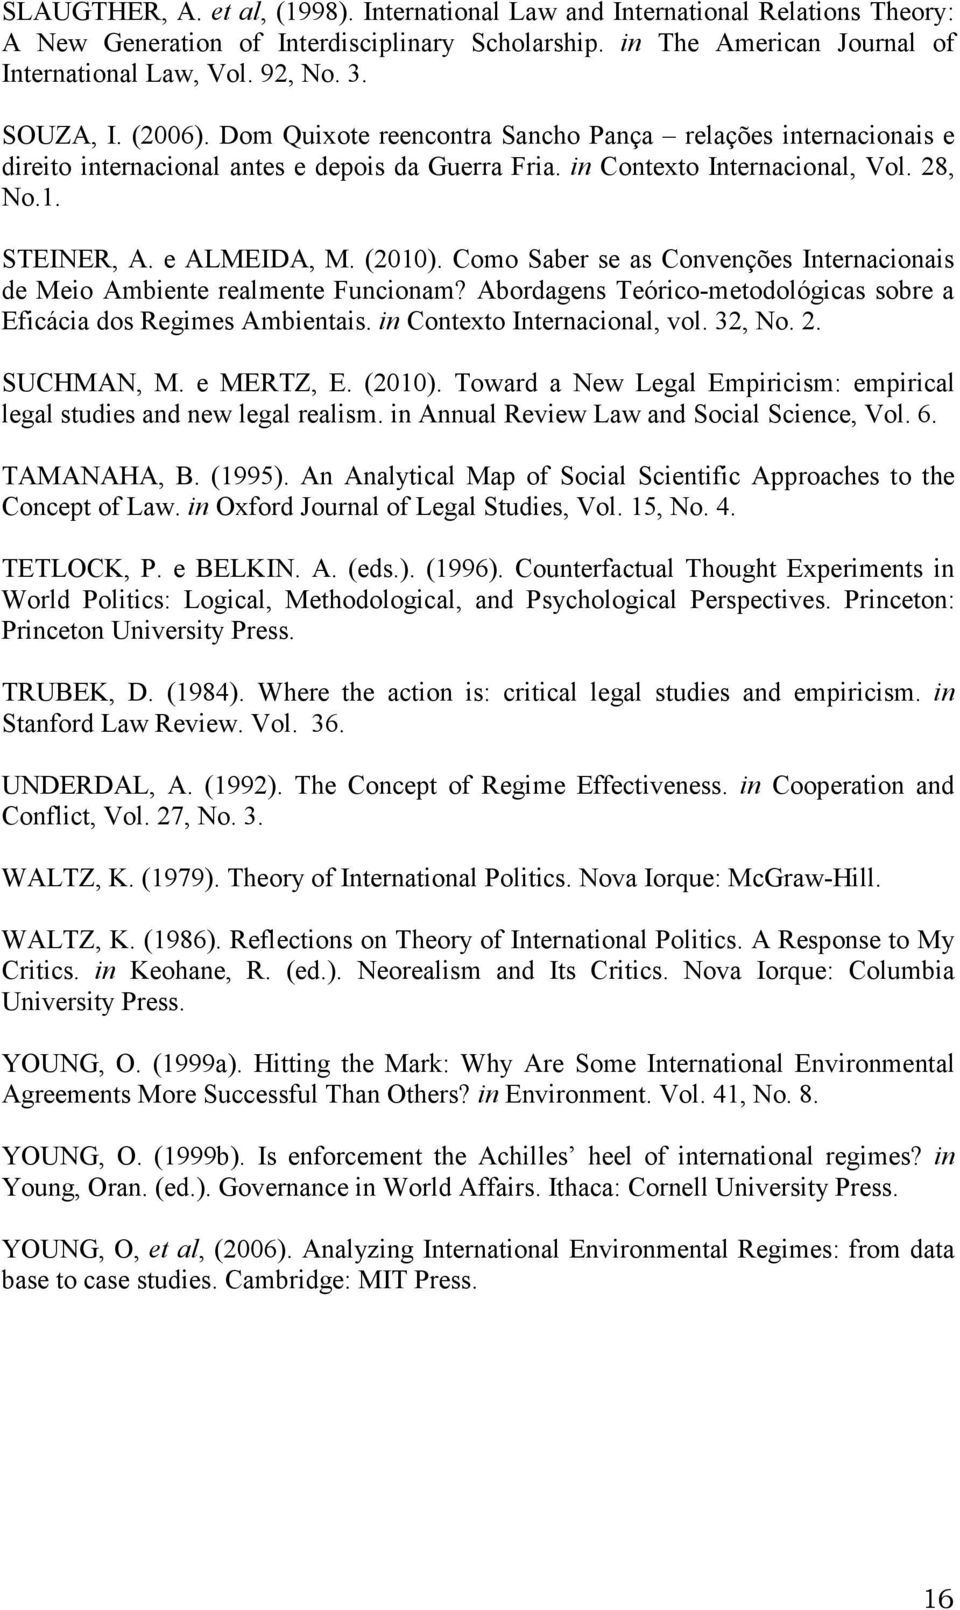 (2010). Como Saber se as Convenções Internacionais de Meio Ambiente realmente Funcionam? Abordagens Teórico-metodológicas sobre a Eficácia dos Regimes Ambientais. in Contexto Internacional, vol.